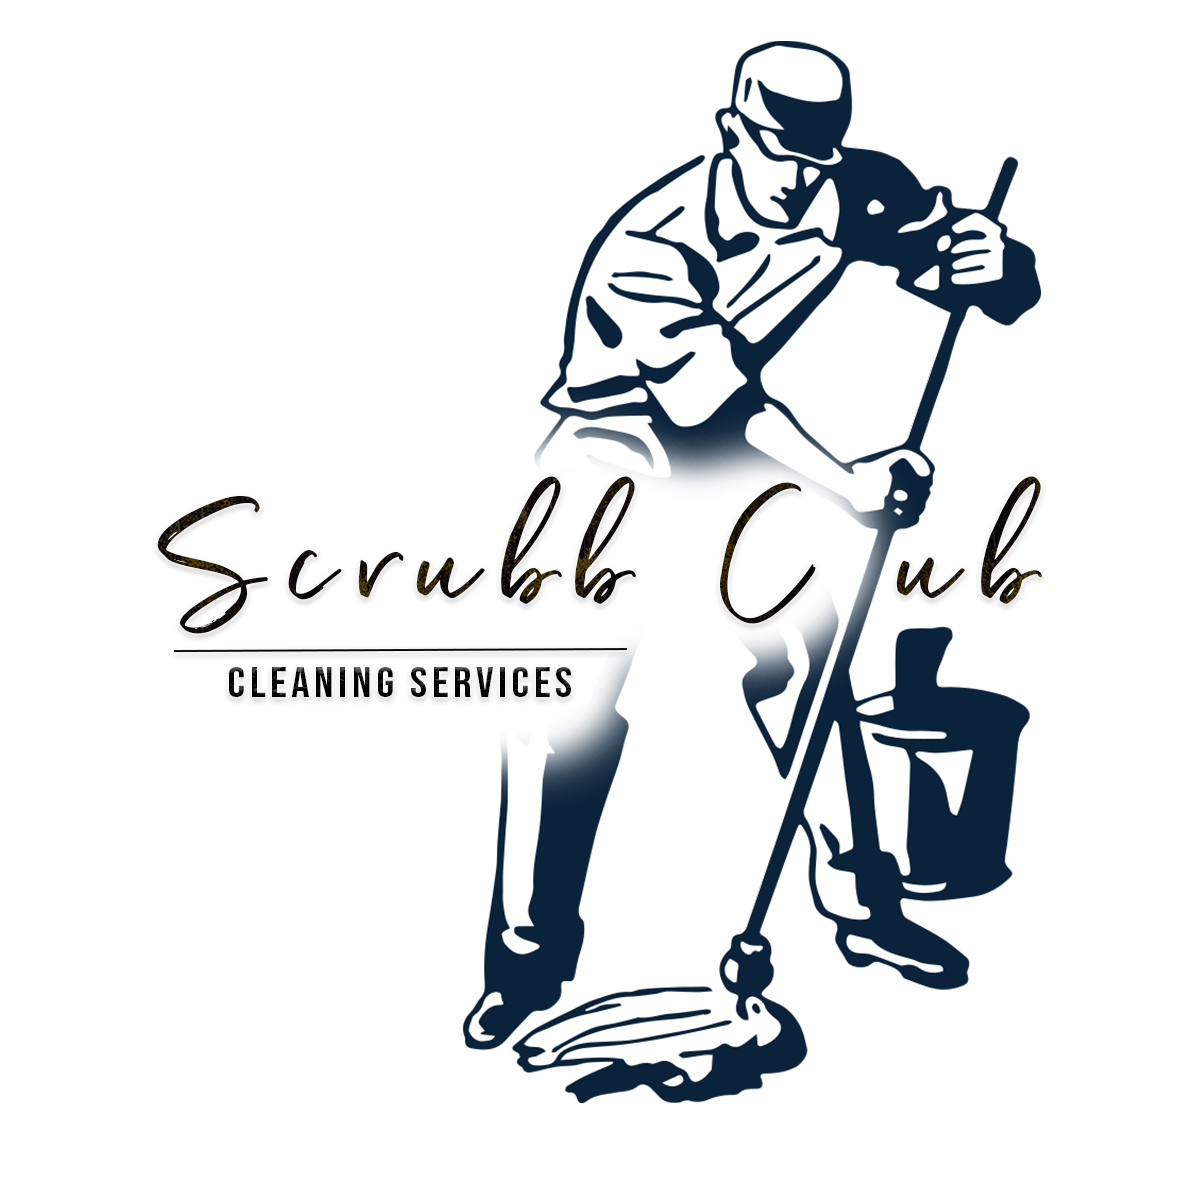 Scrubb Club